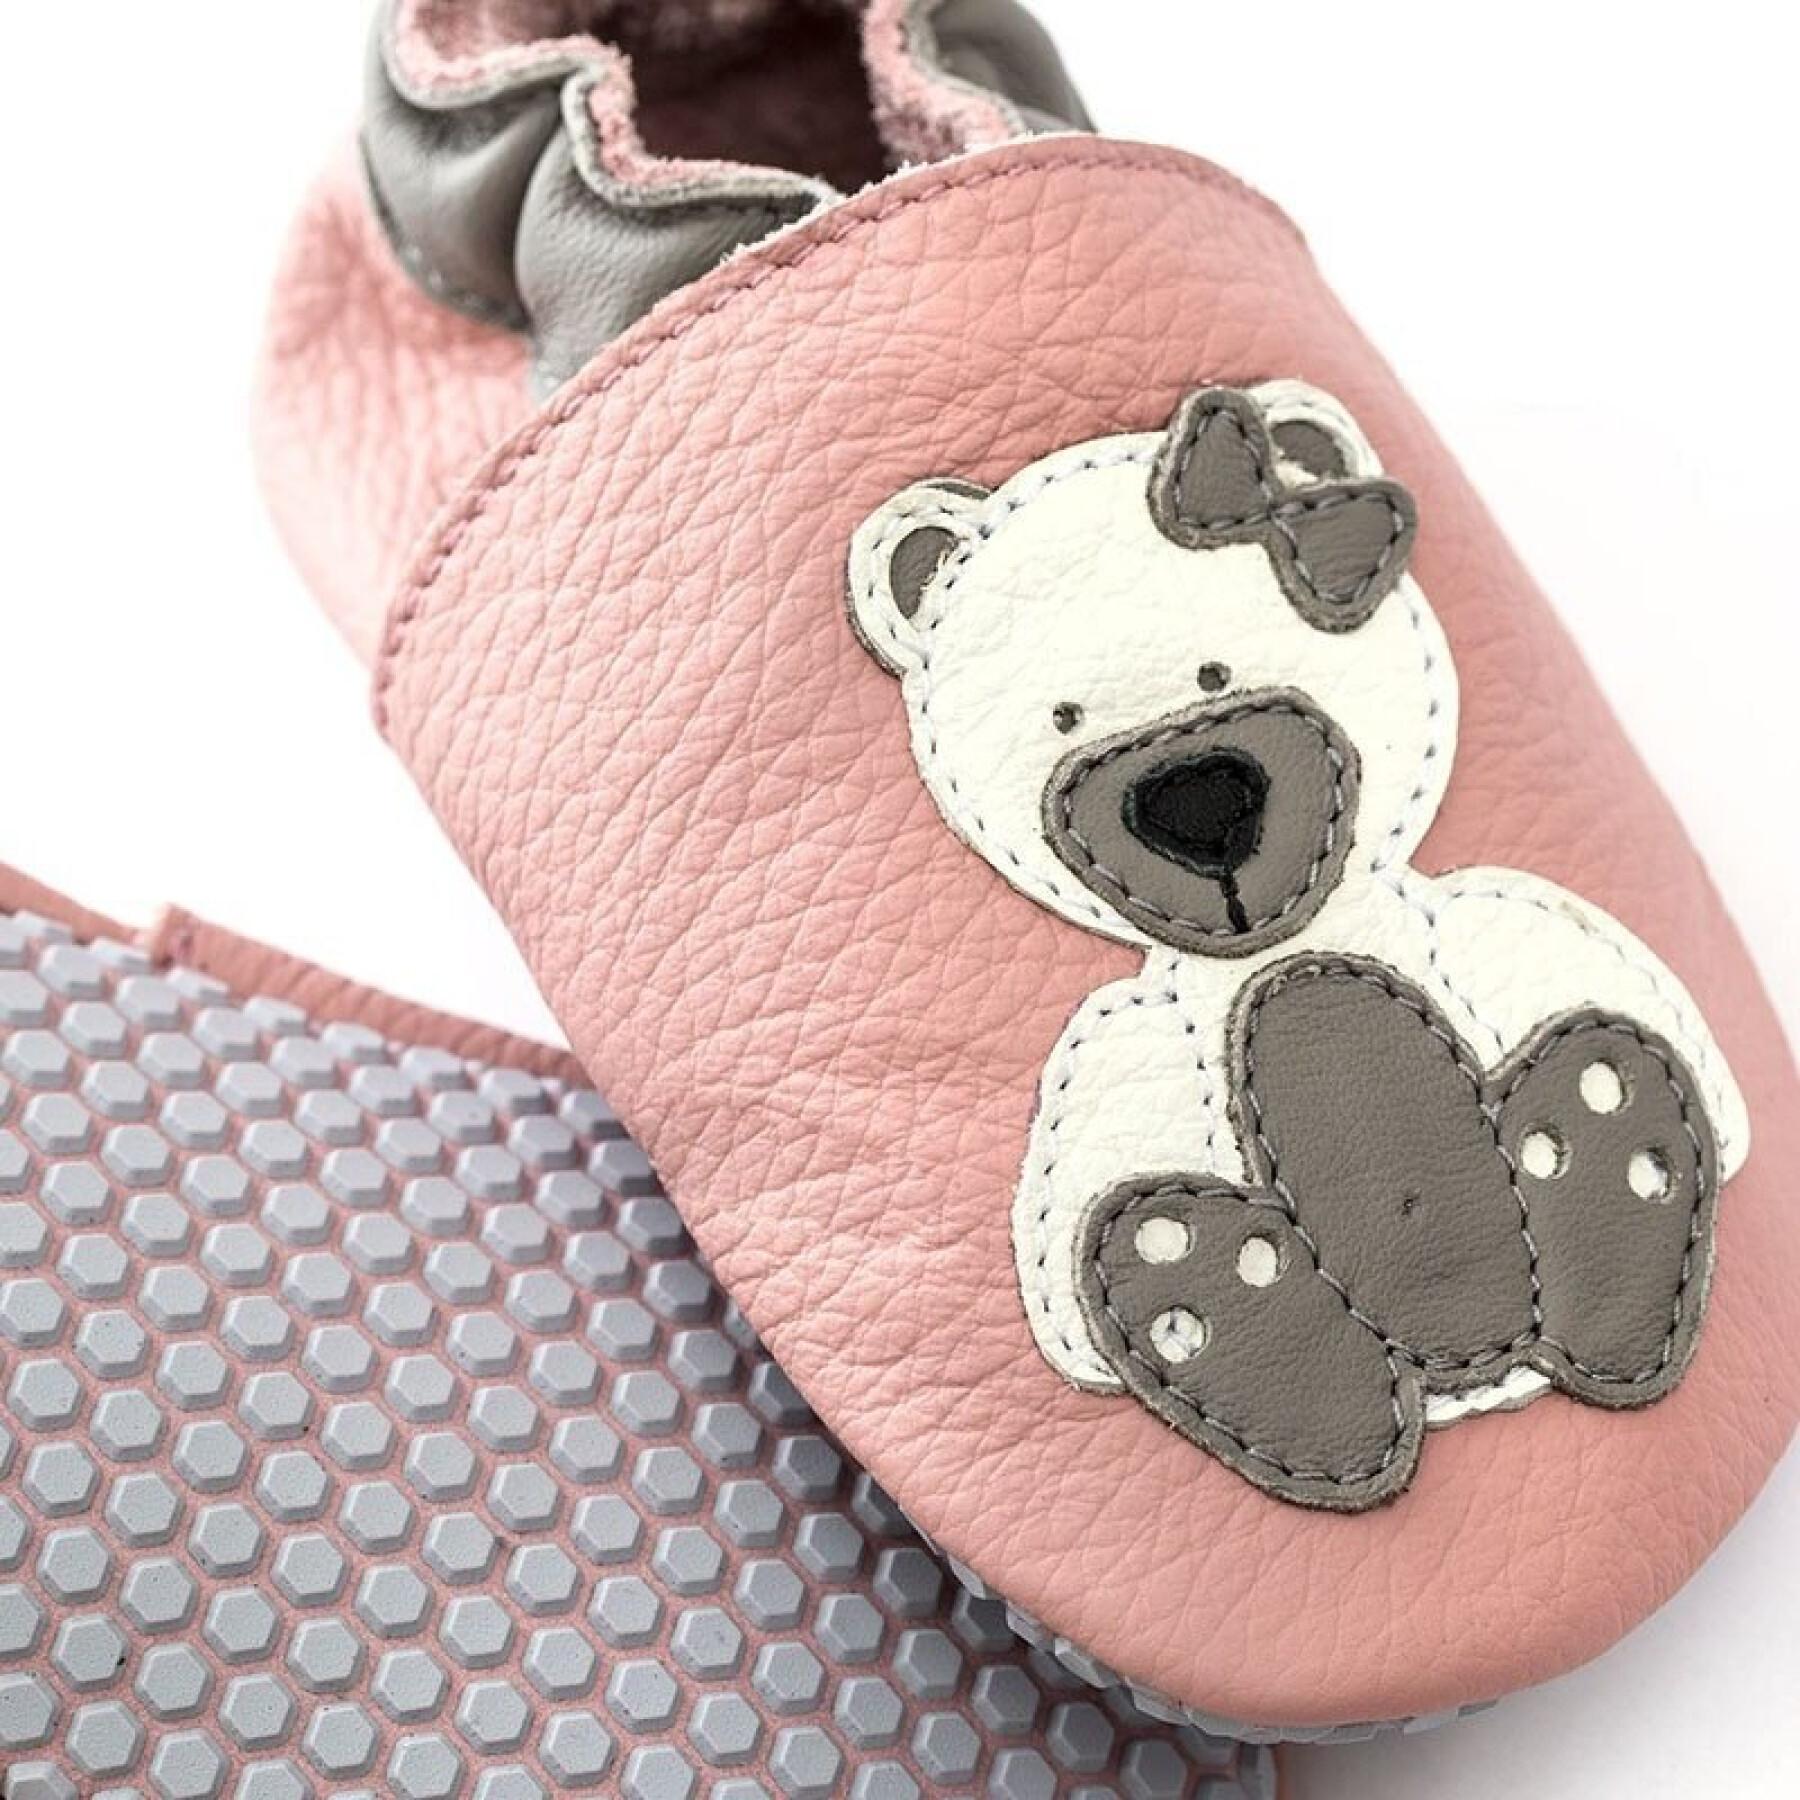 Girl's soft slippers Liliputi Polar Teddy